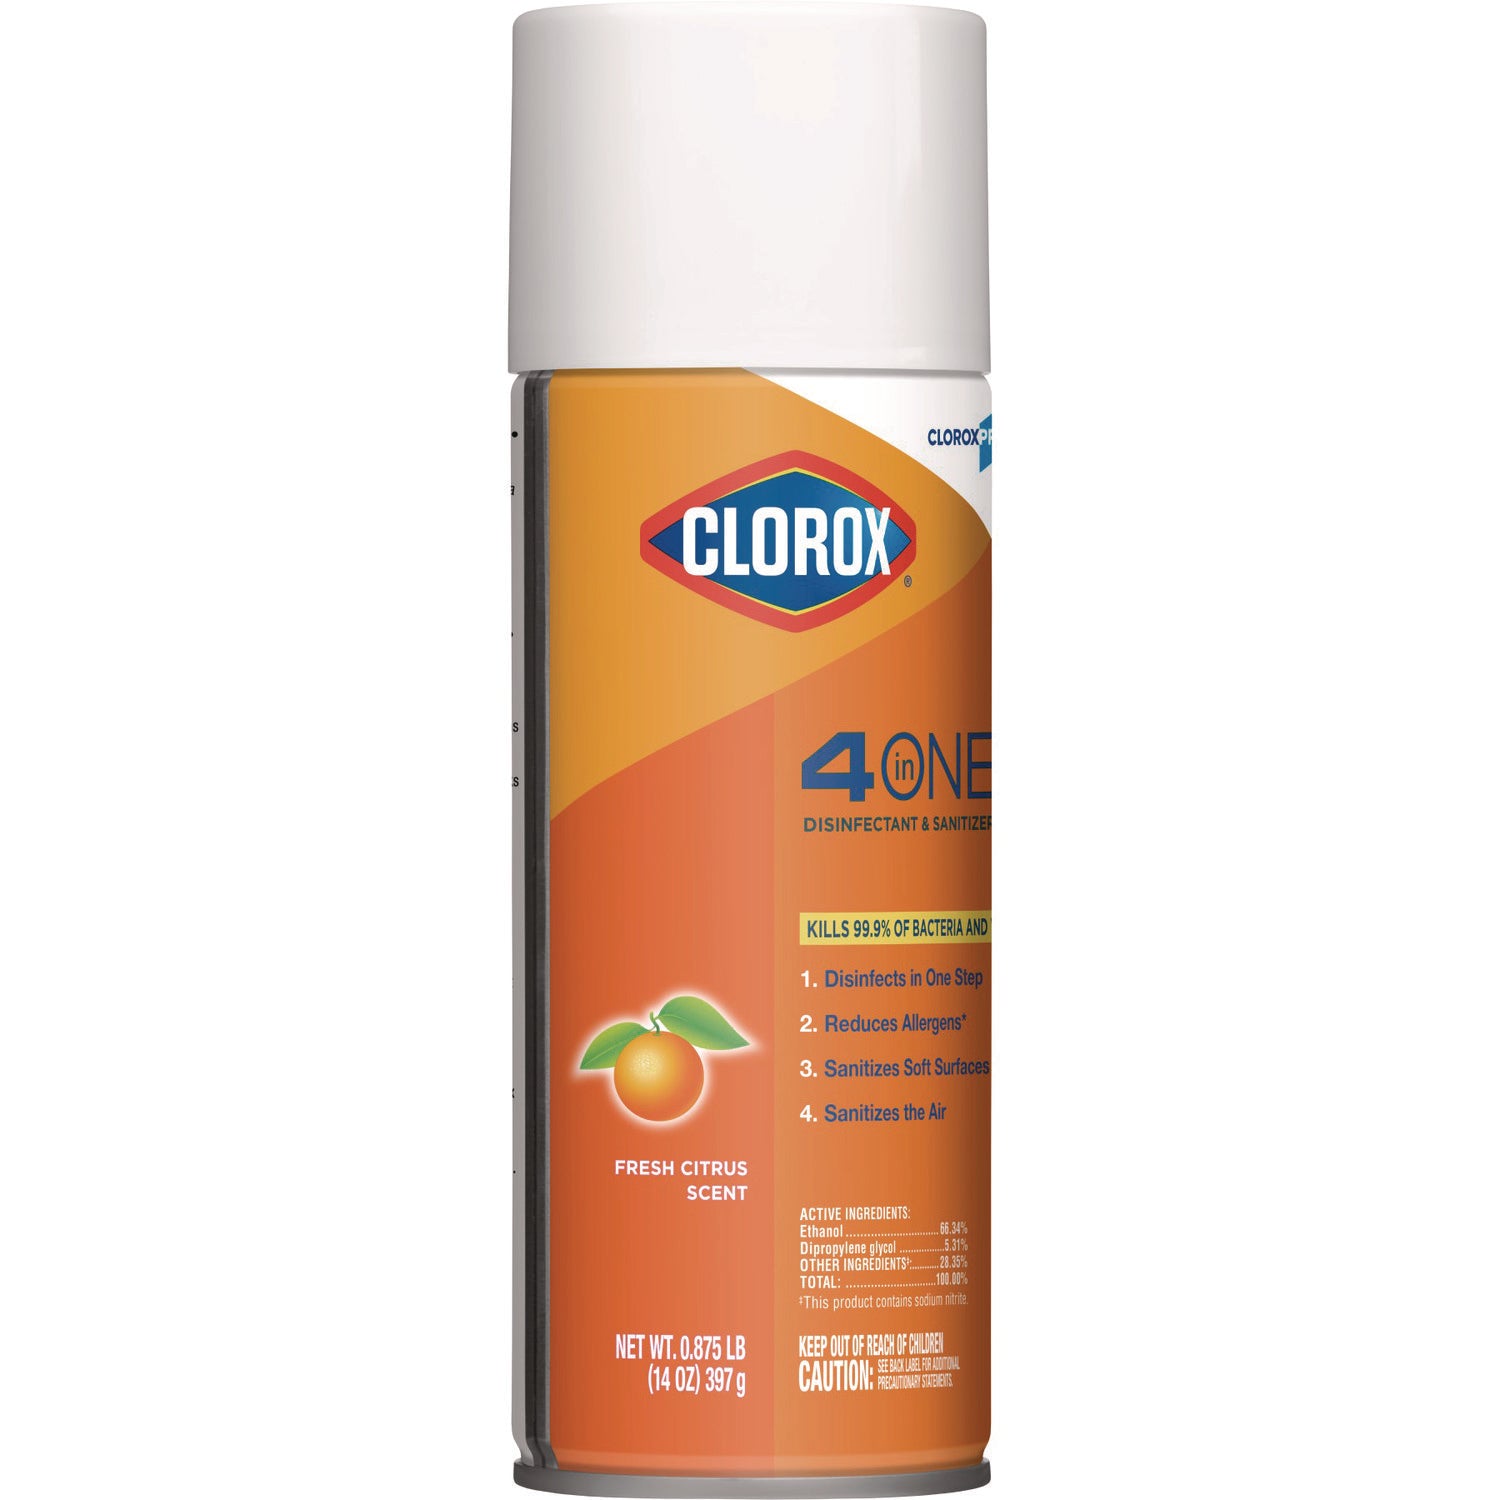 4-in-One Disinfectant and Sanitizer, Citrus, 14 oz Aerosol Spray - 